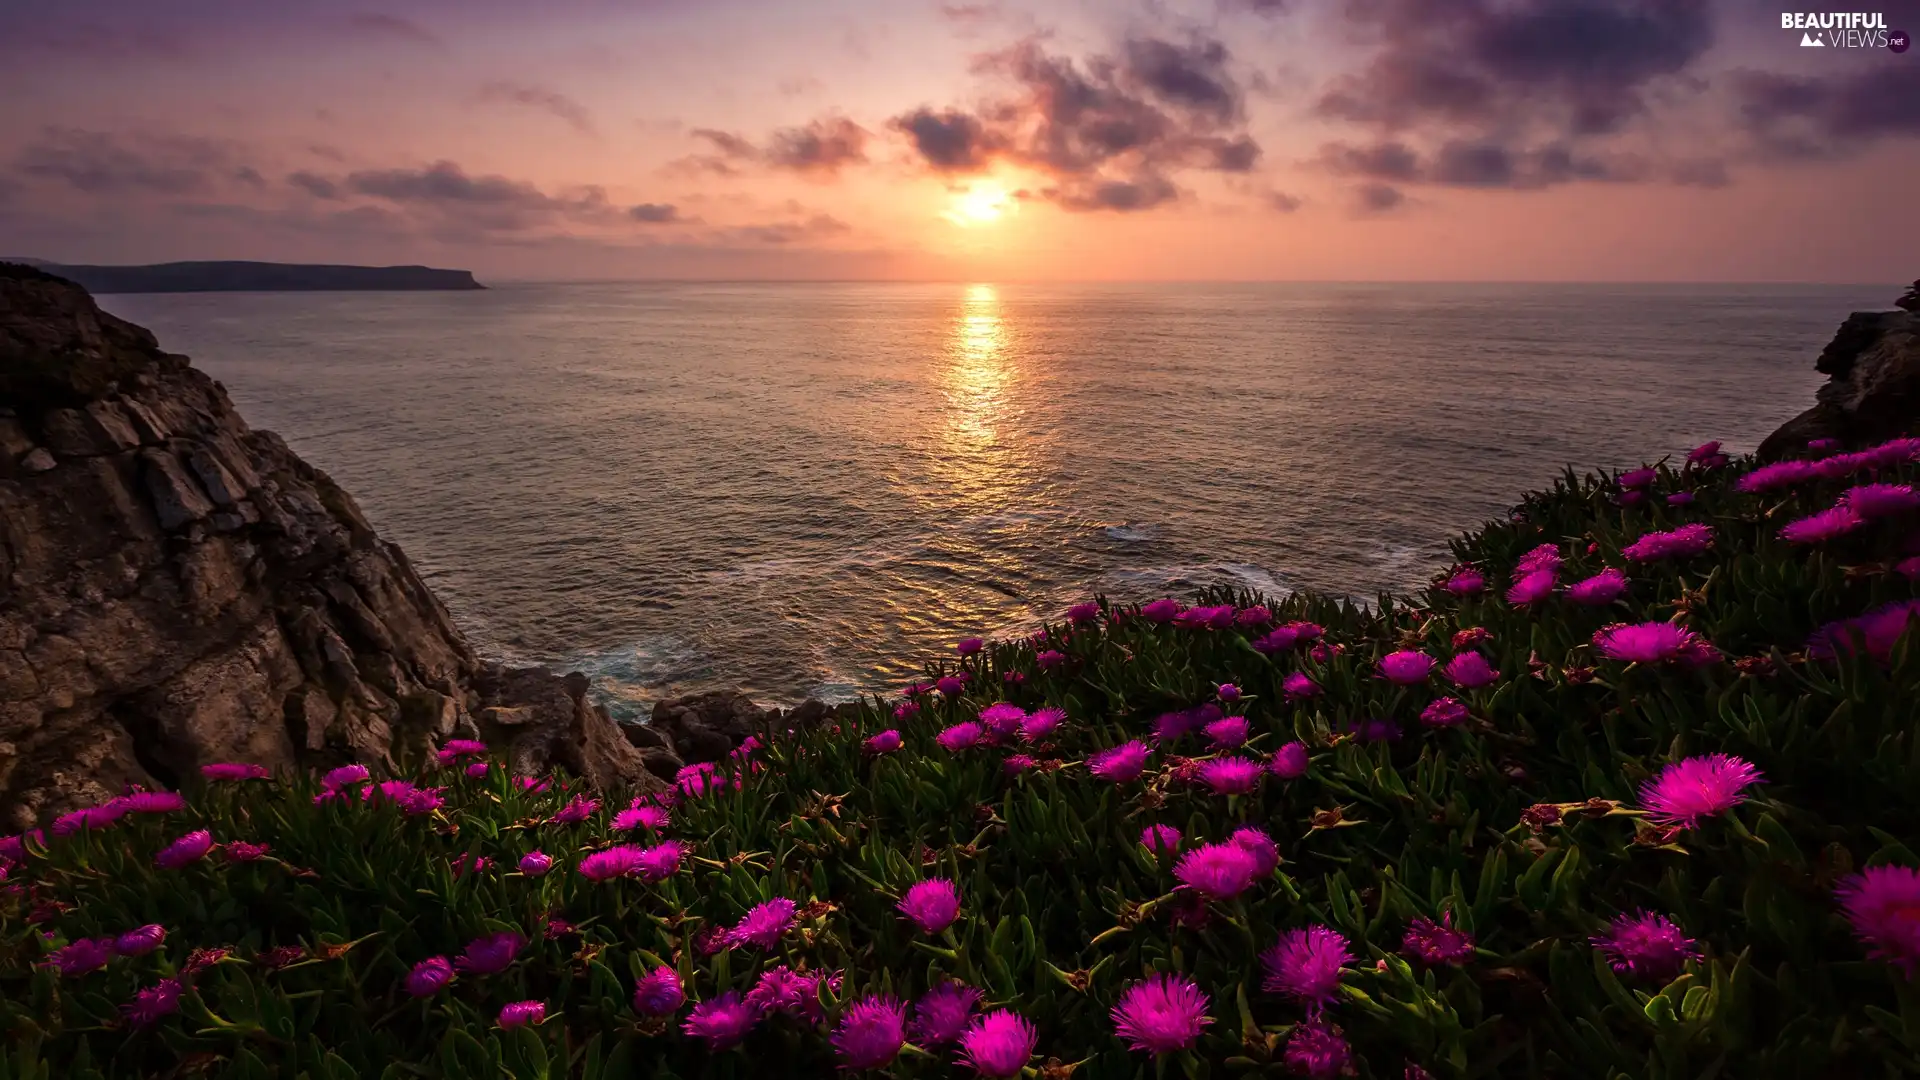 Asturias, Spain, Bay of Biscay, sea, Sunrise, clouds, rocks, Flowers, coast